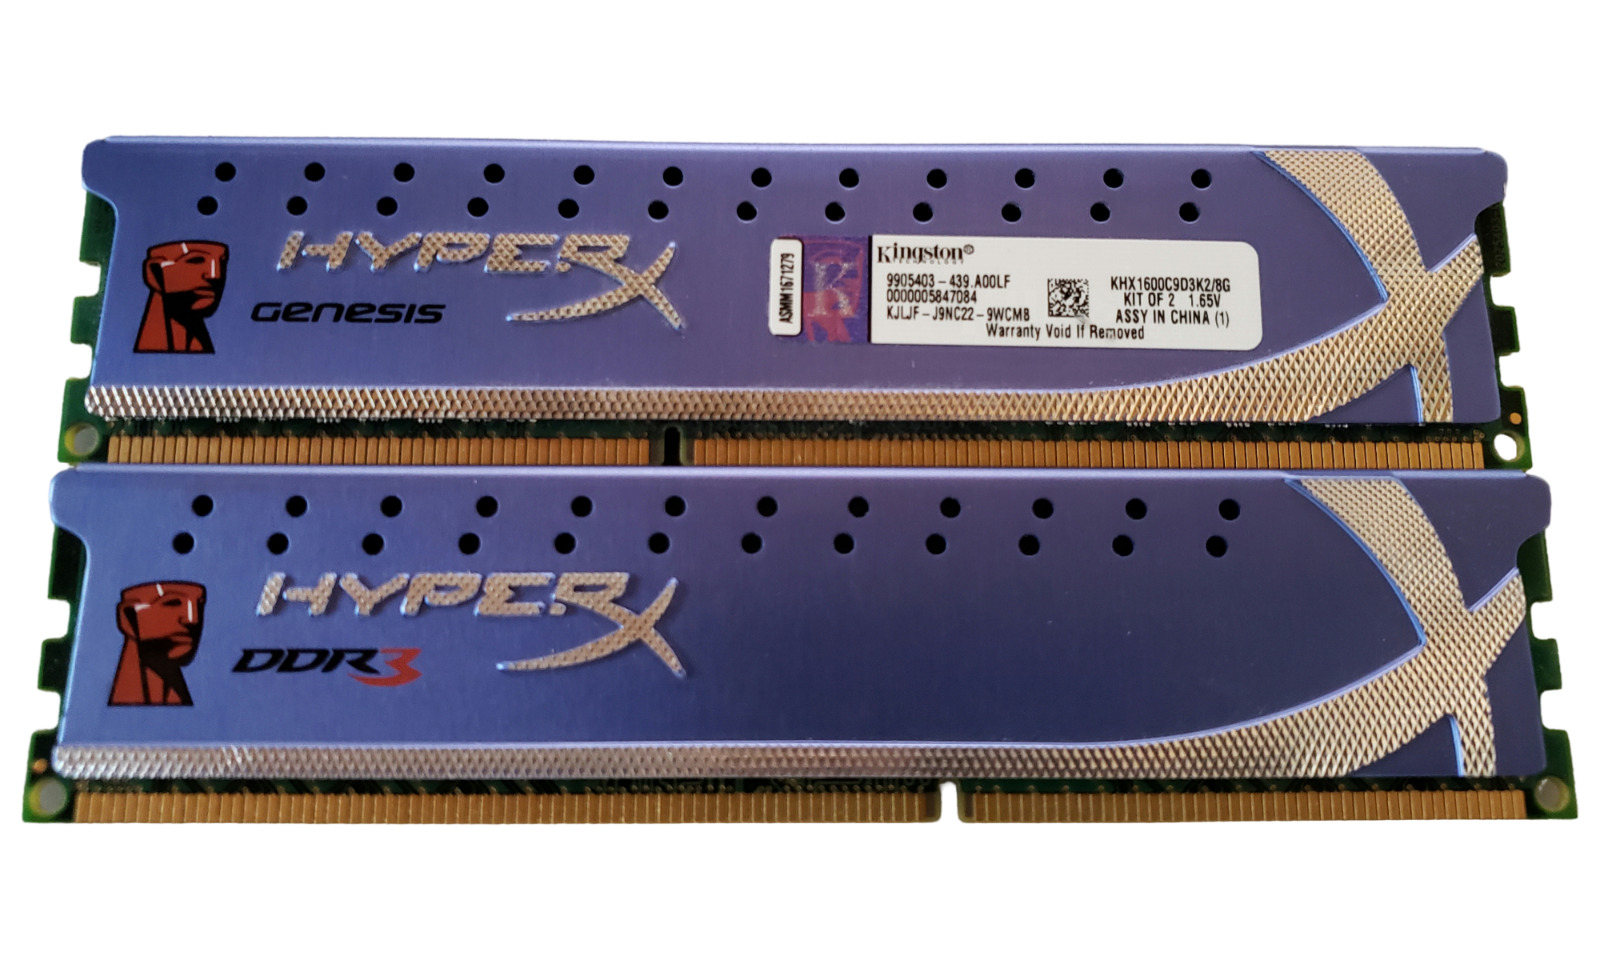 (2 Piece) Kingston HyperX Genesis KHX1600C9D3K2/8G DDR3-1600 8GB (2x4GB) Memory